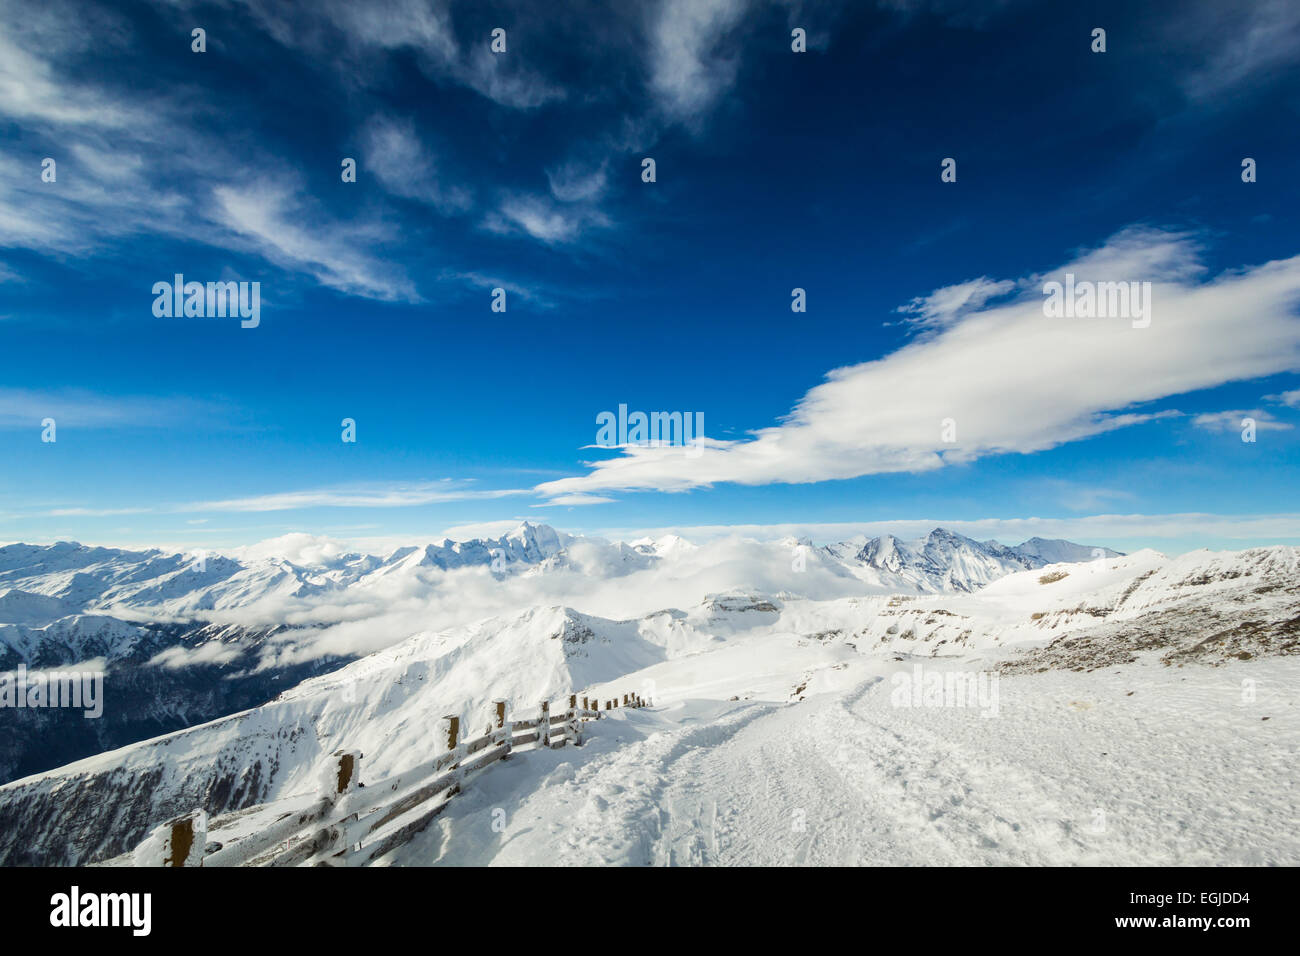 Heiligenblut-Grossglockner ski resort in austrian Alps Stock Photo